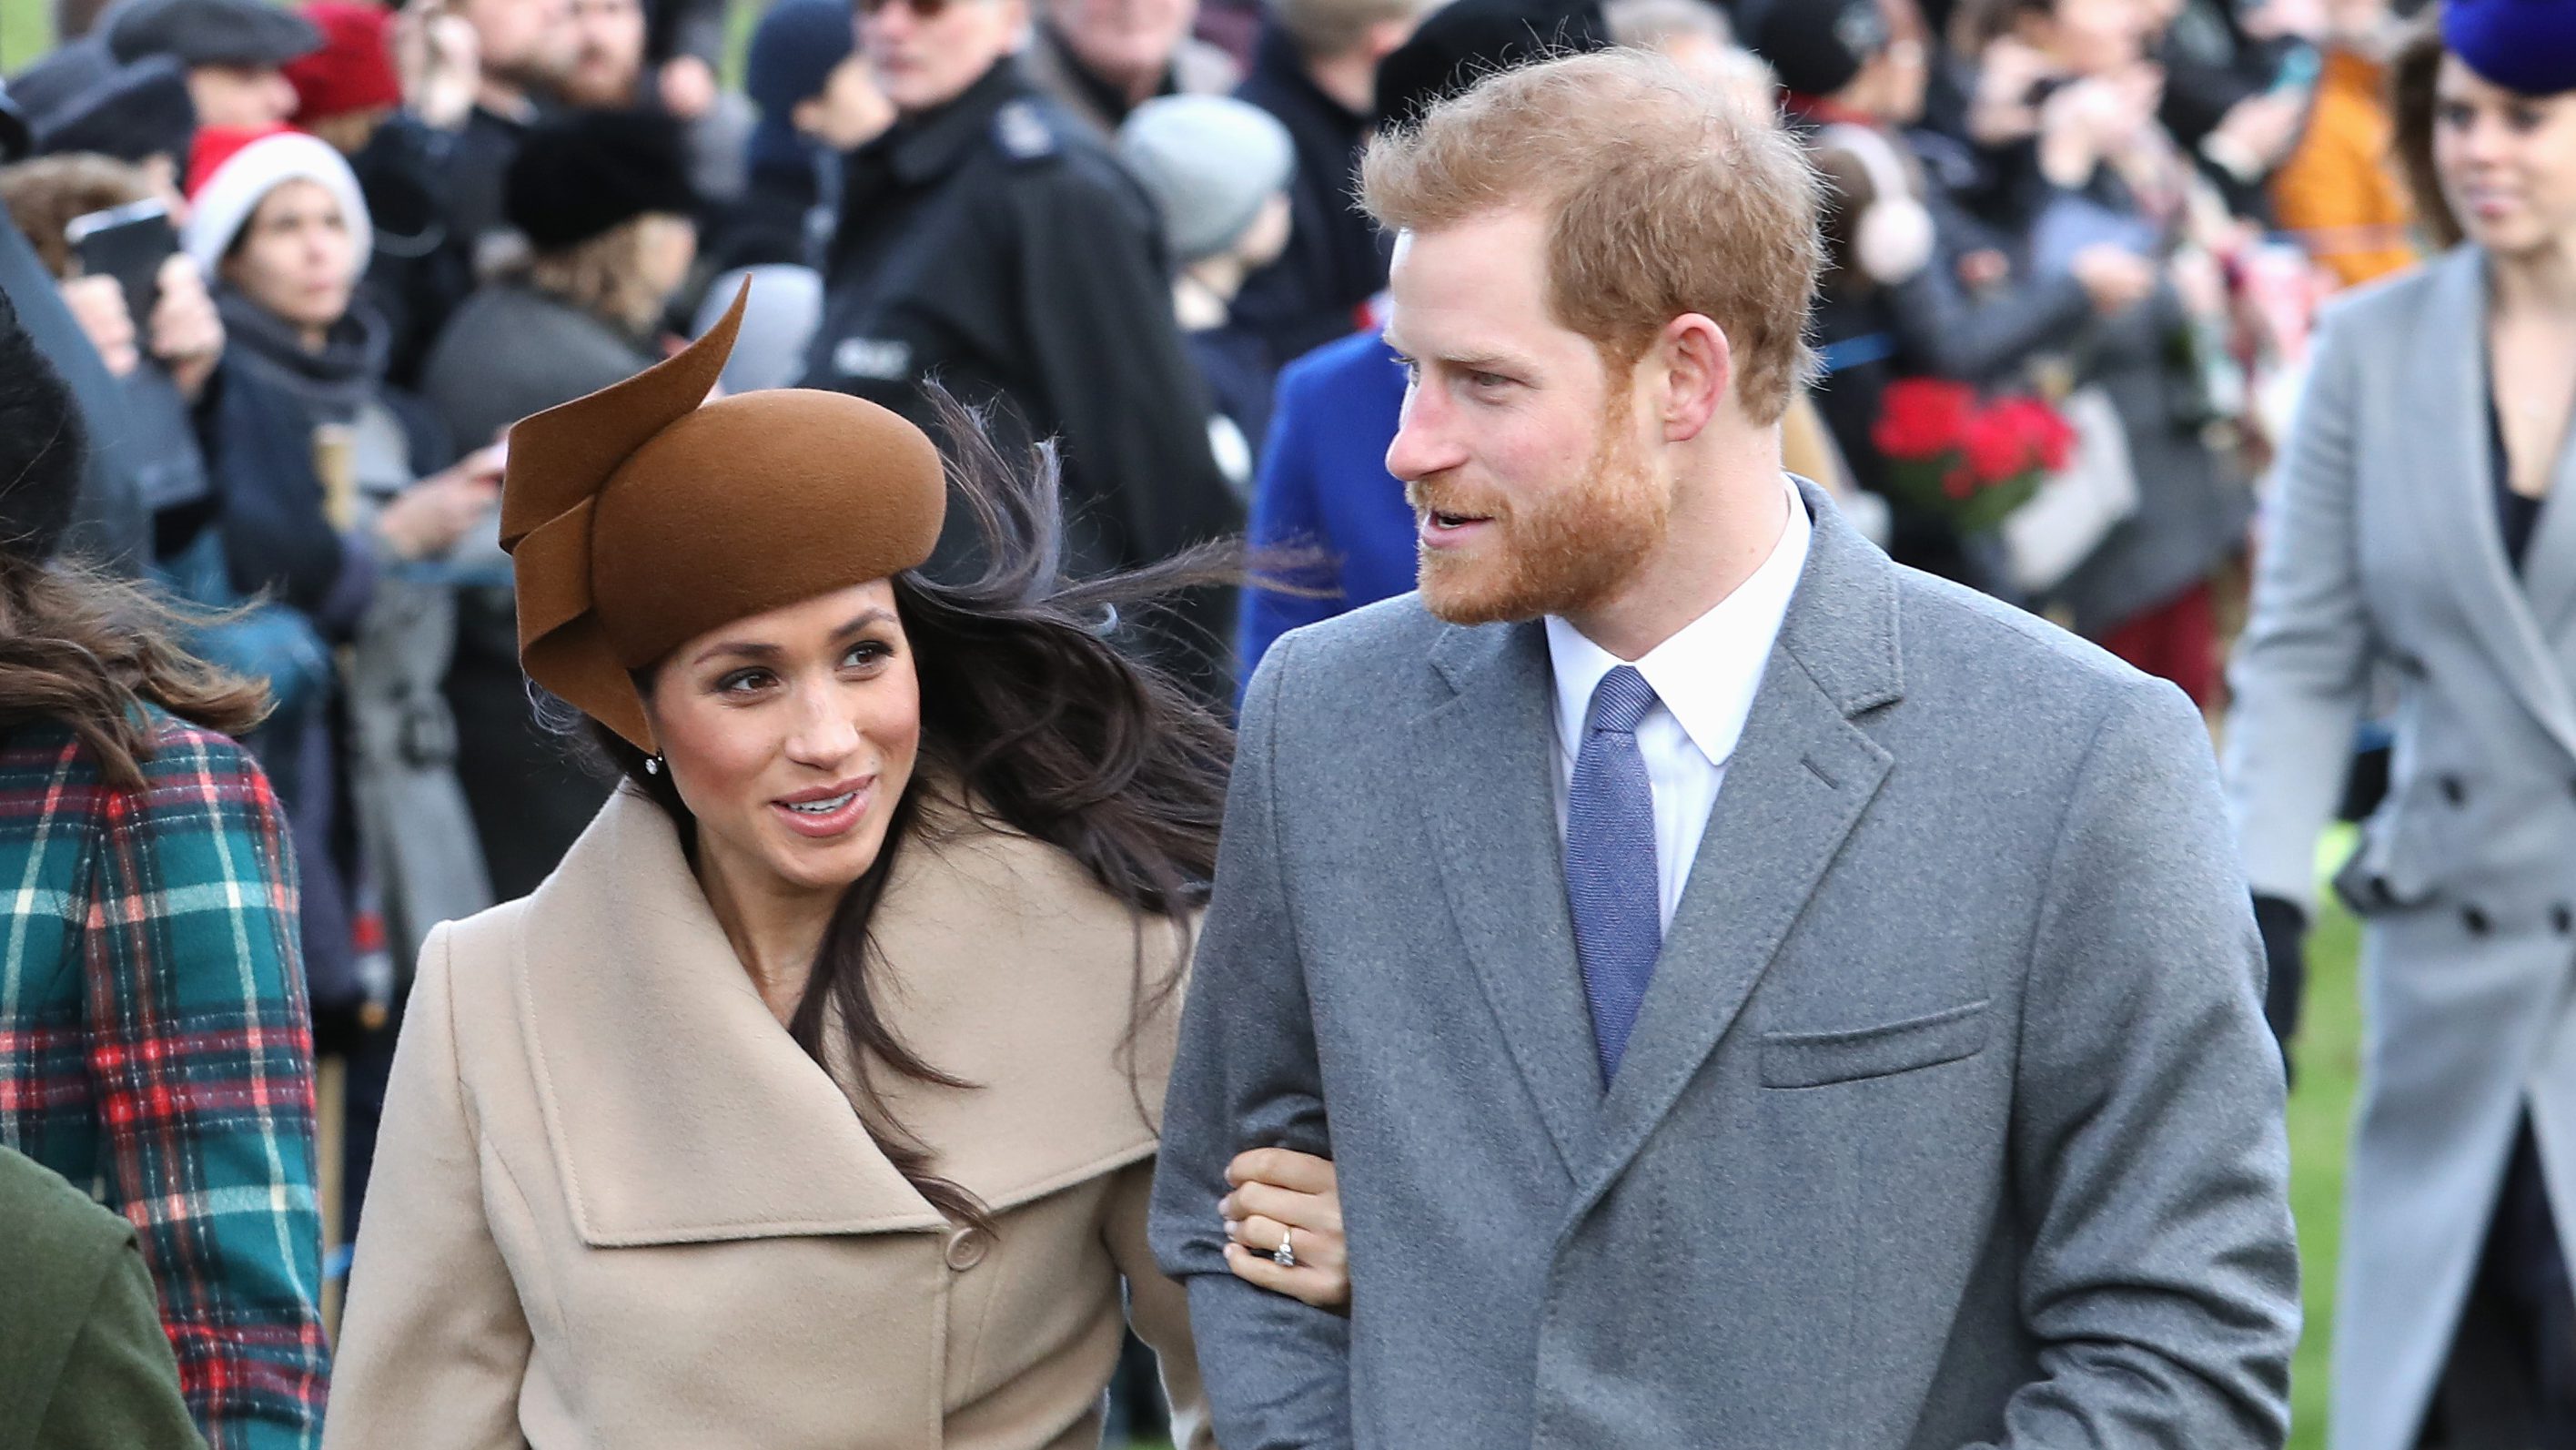 PHOTOS Meghan Markle Joins Royal Family for Christmas